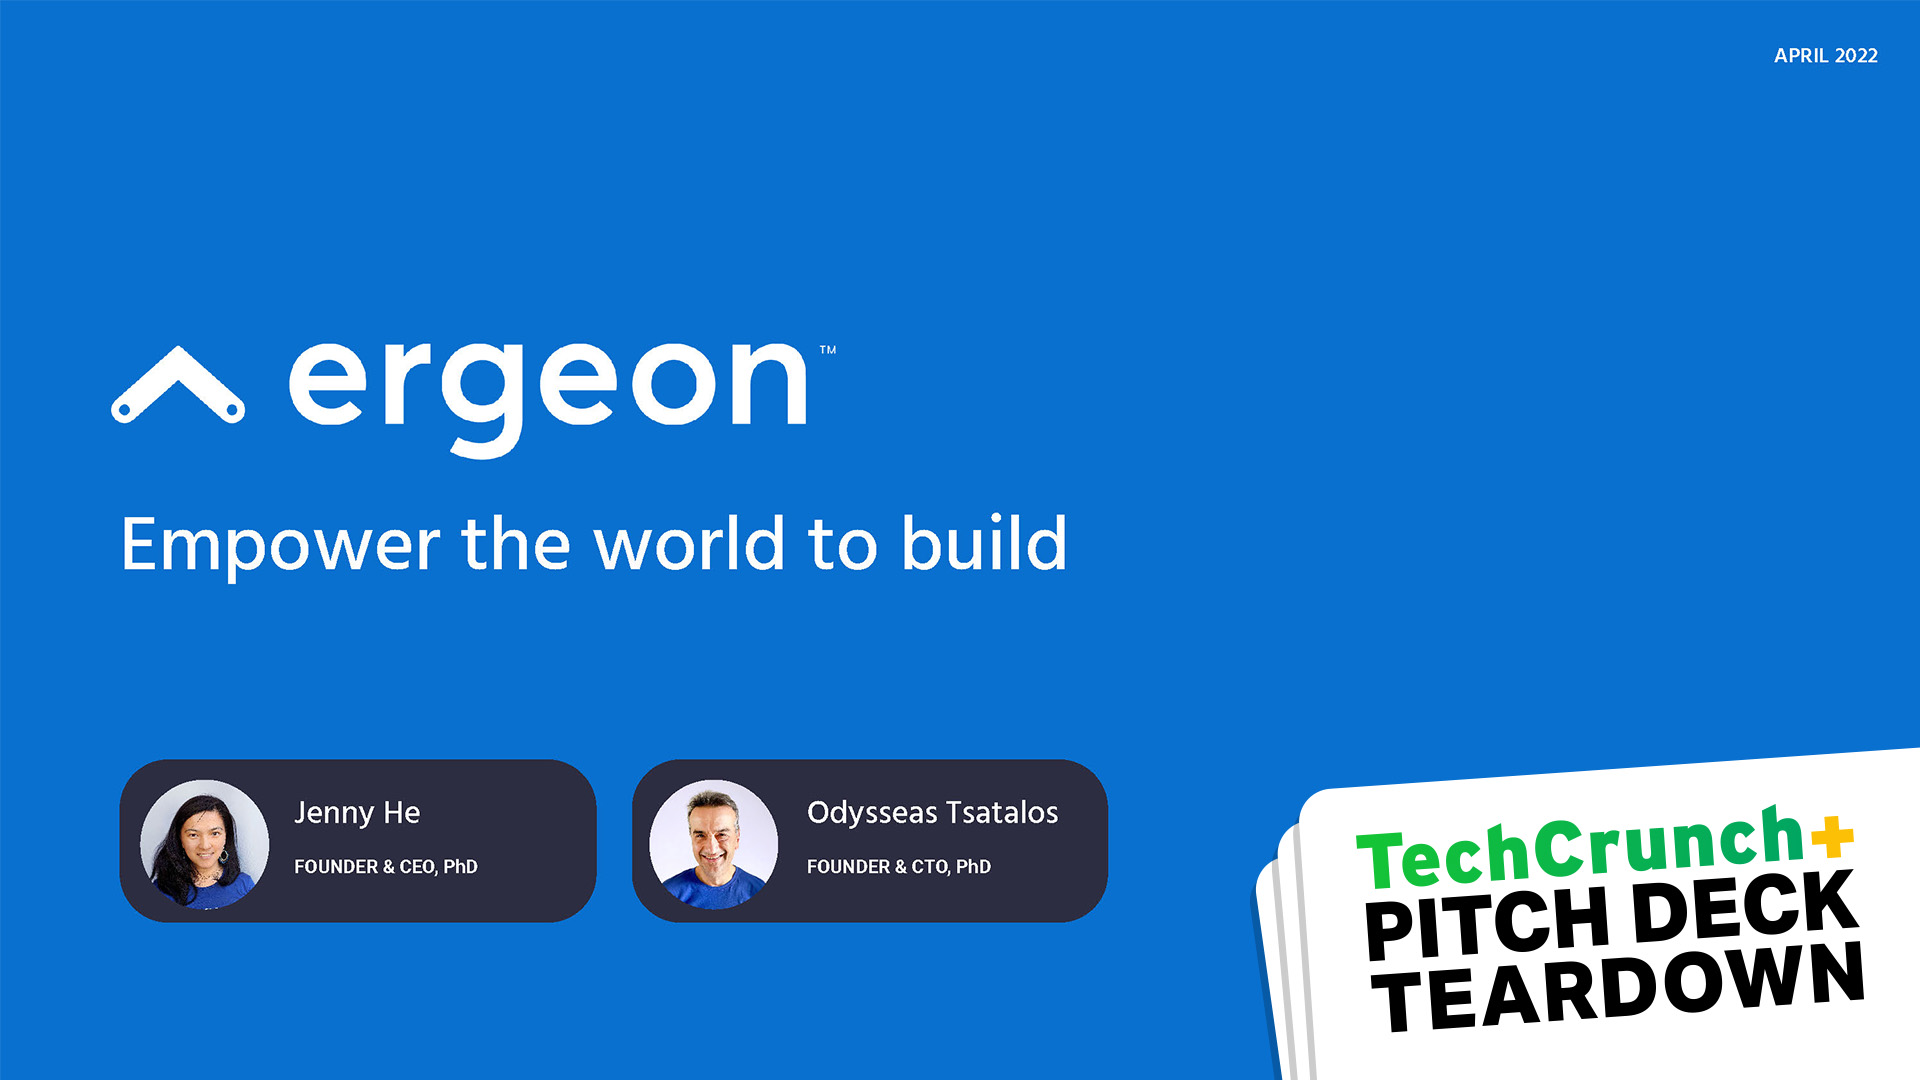 Diapositiva de portada de Ergeon para su plataforma de diapositivas de $ 40 millones